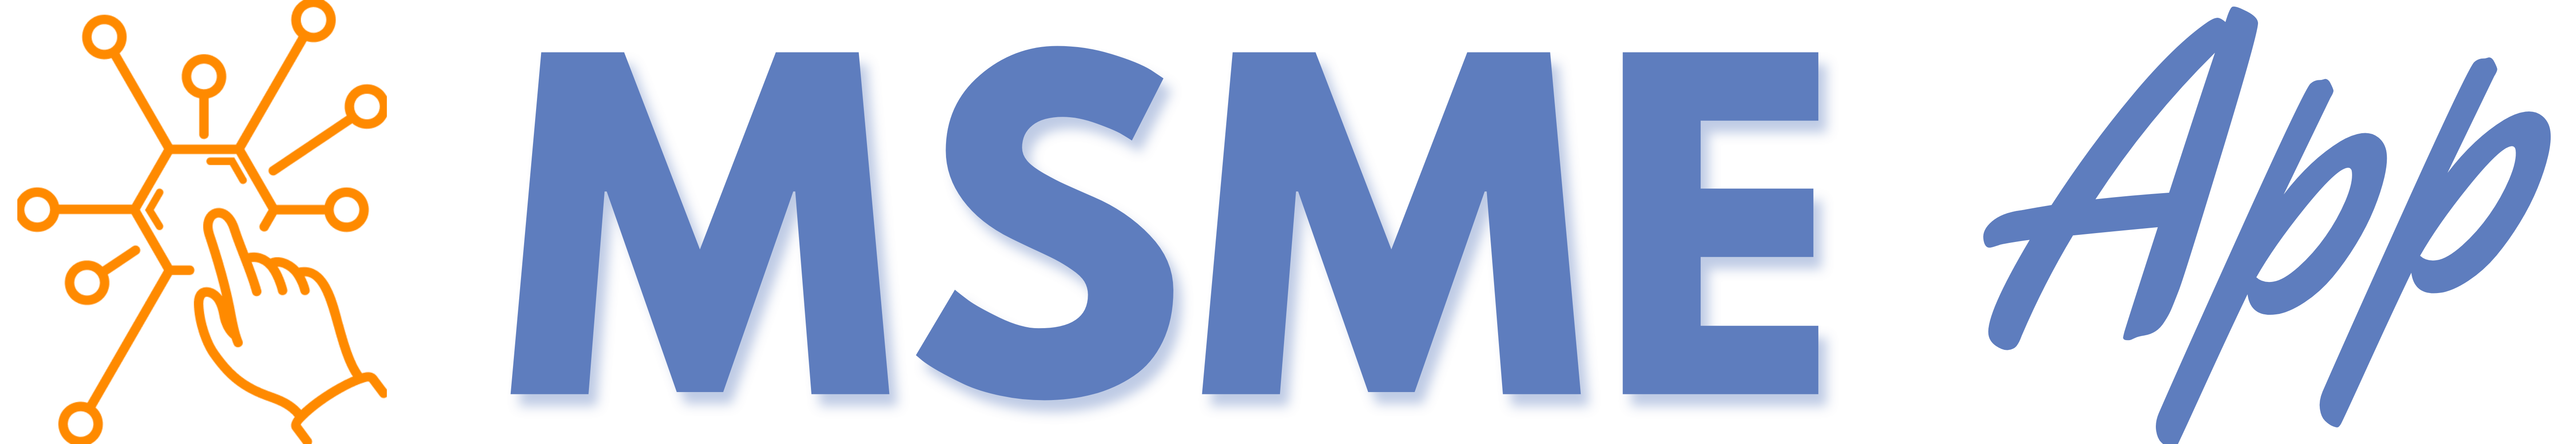 MSME App Logo